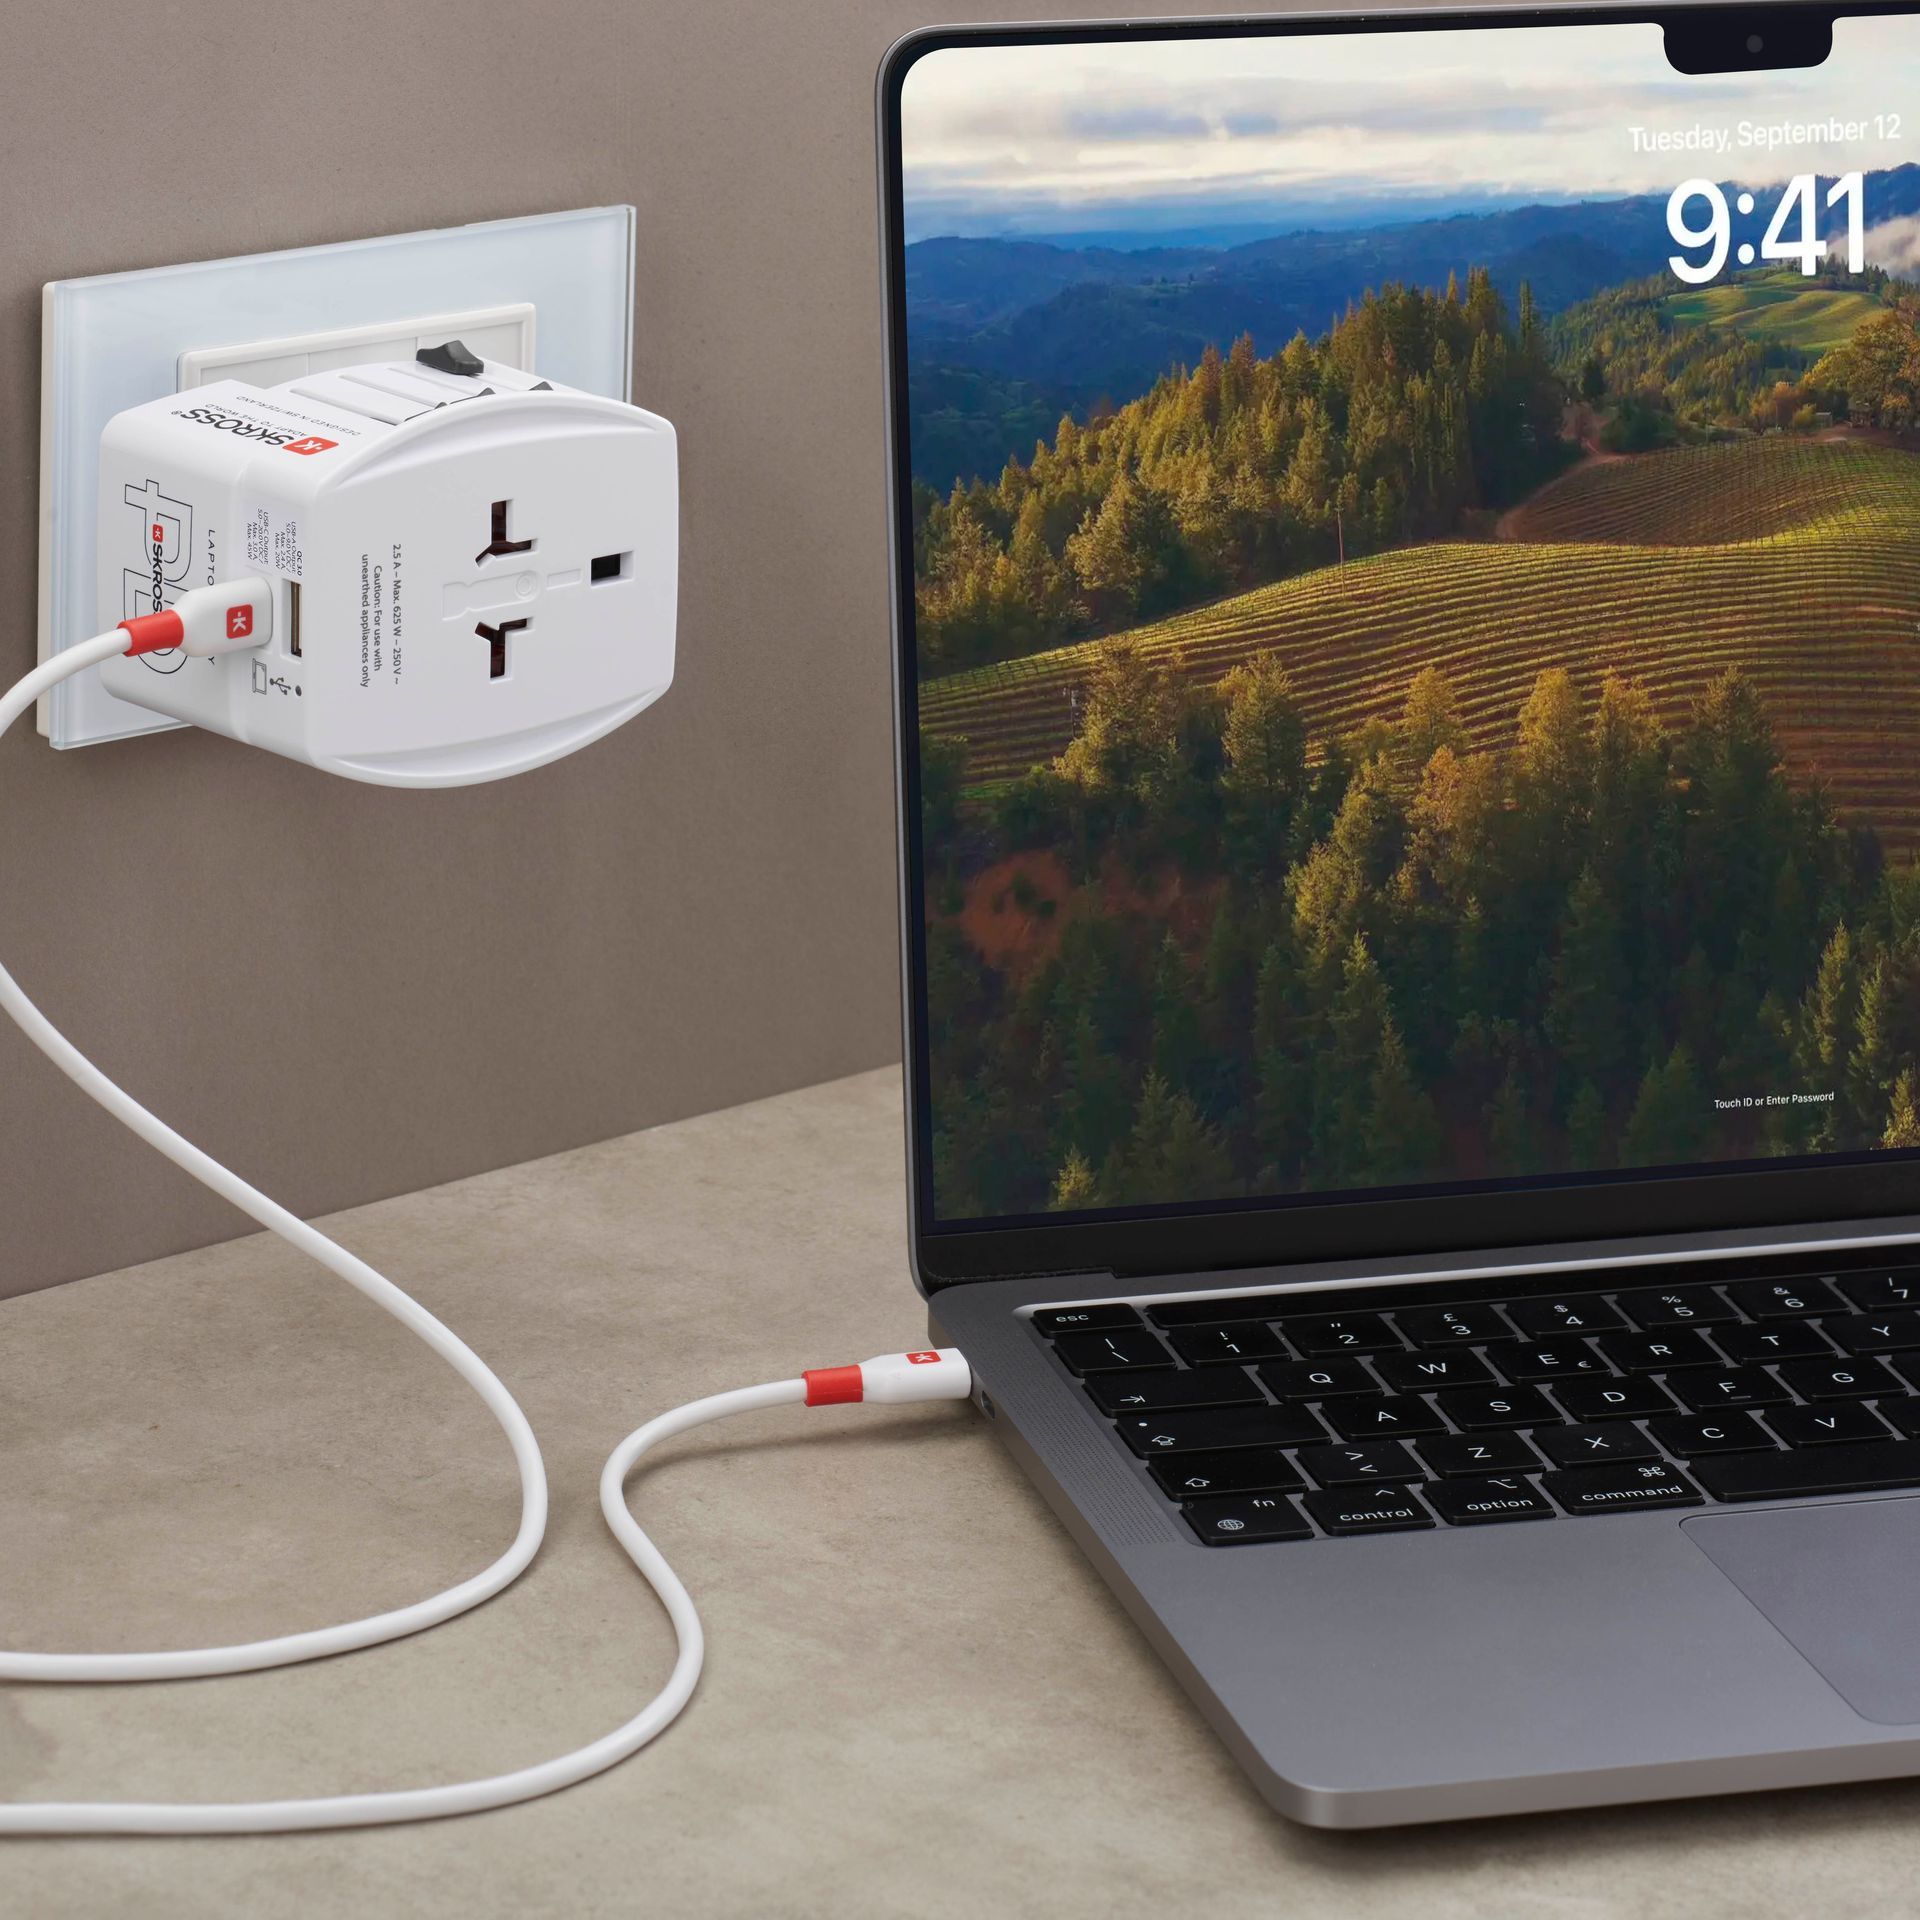 Skross 2-Pole MUV USB AC45PD Travel Adapter charging a laptop SKR-0244